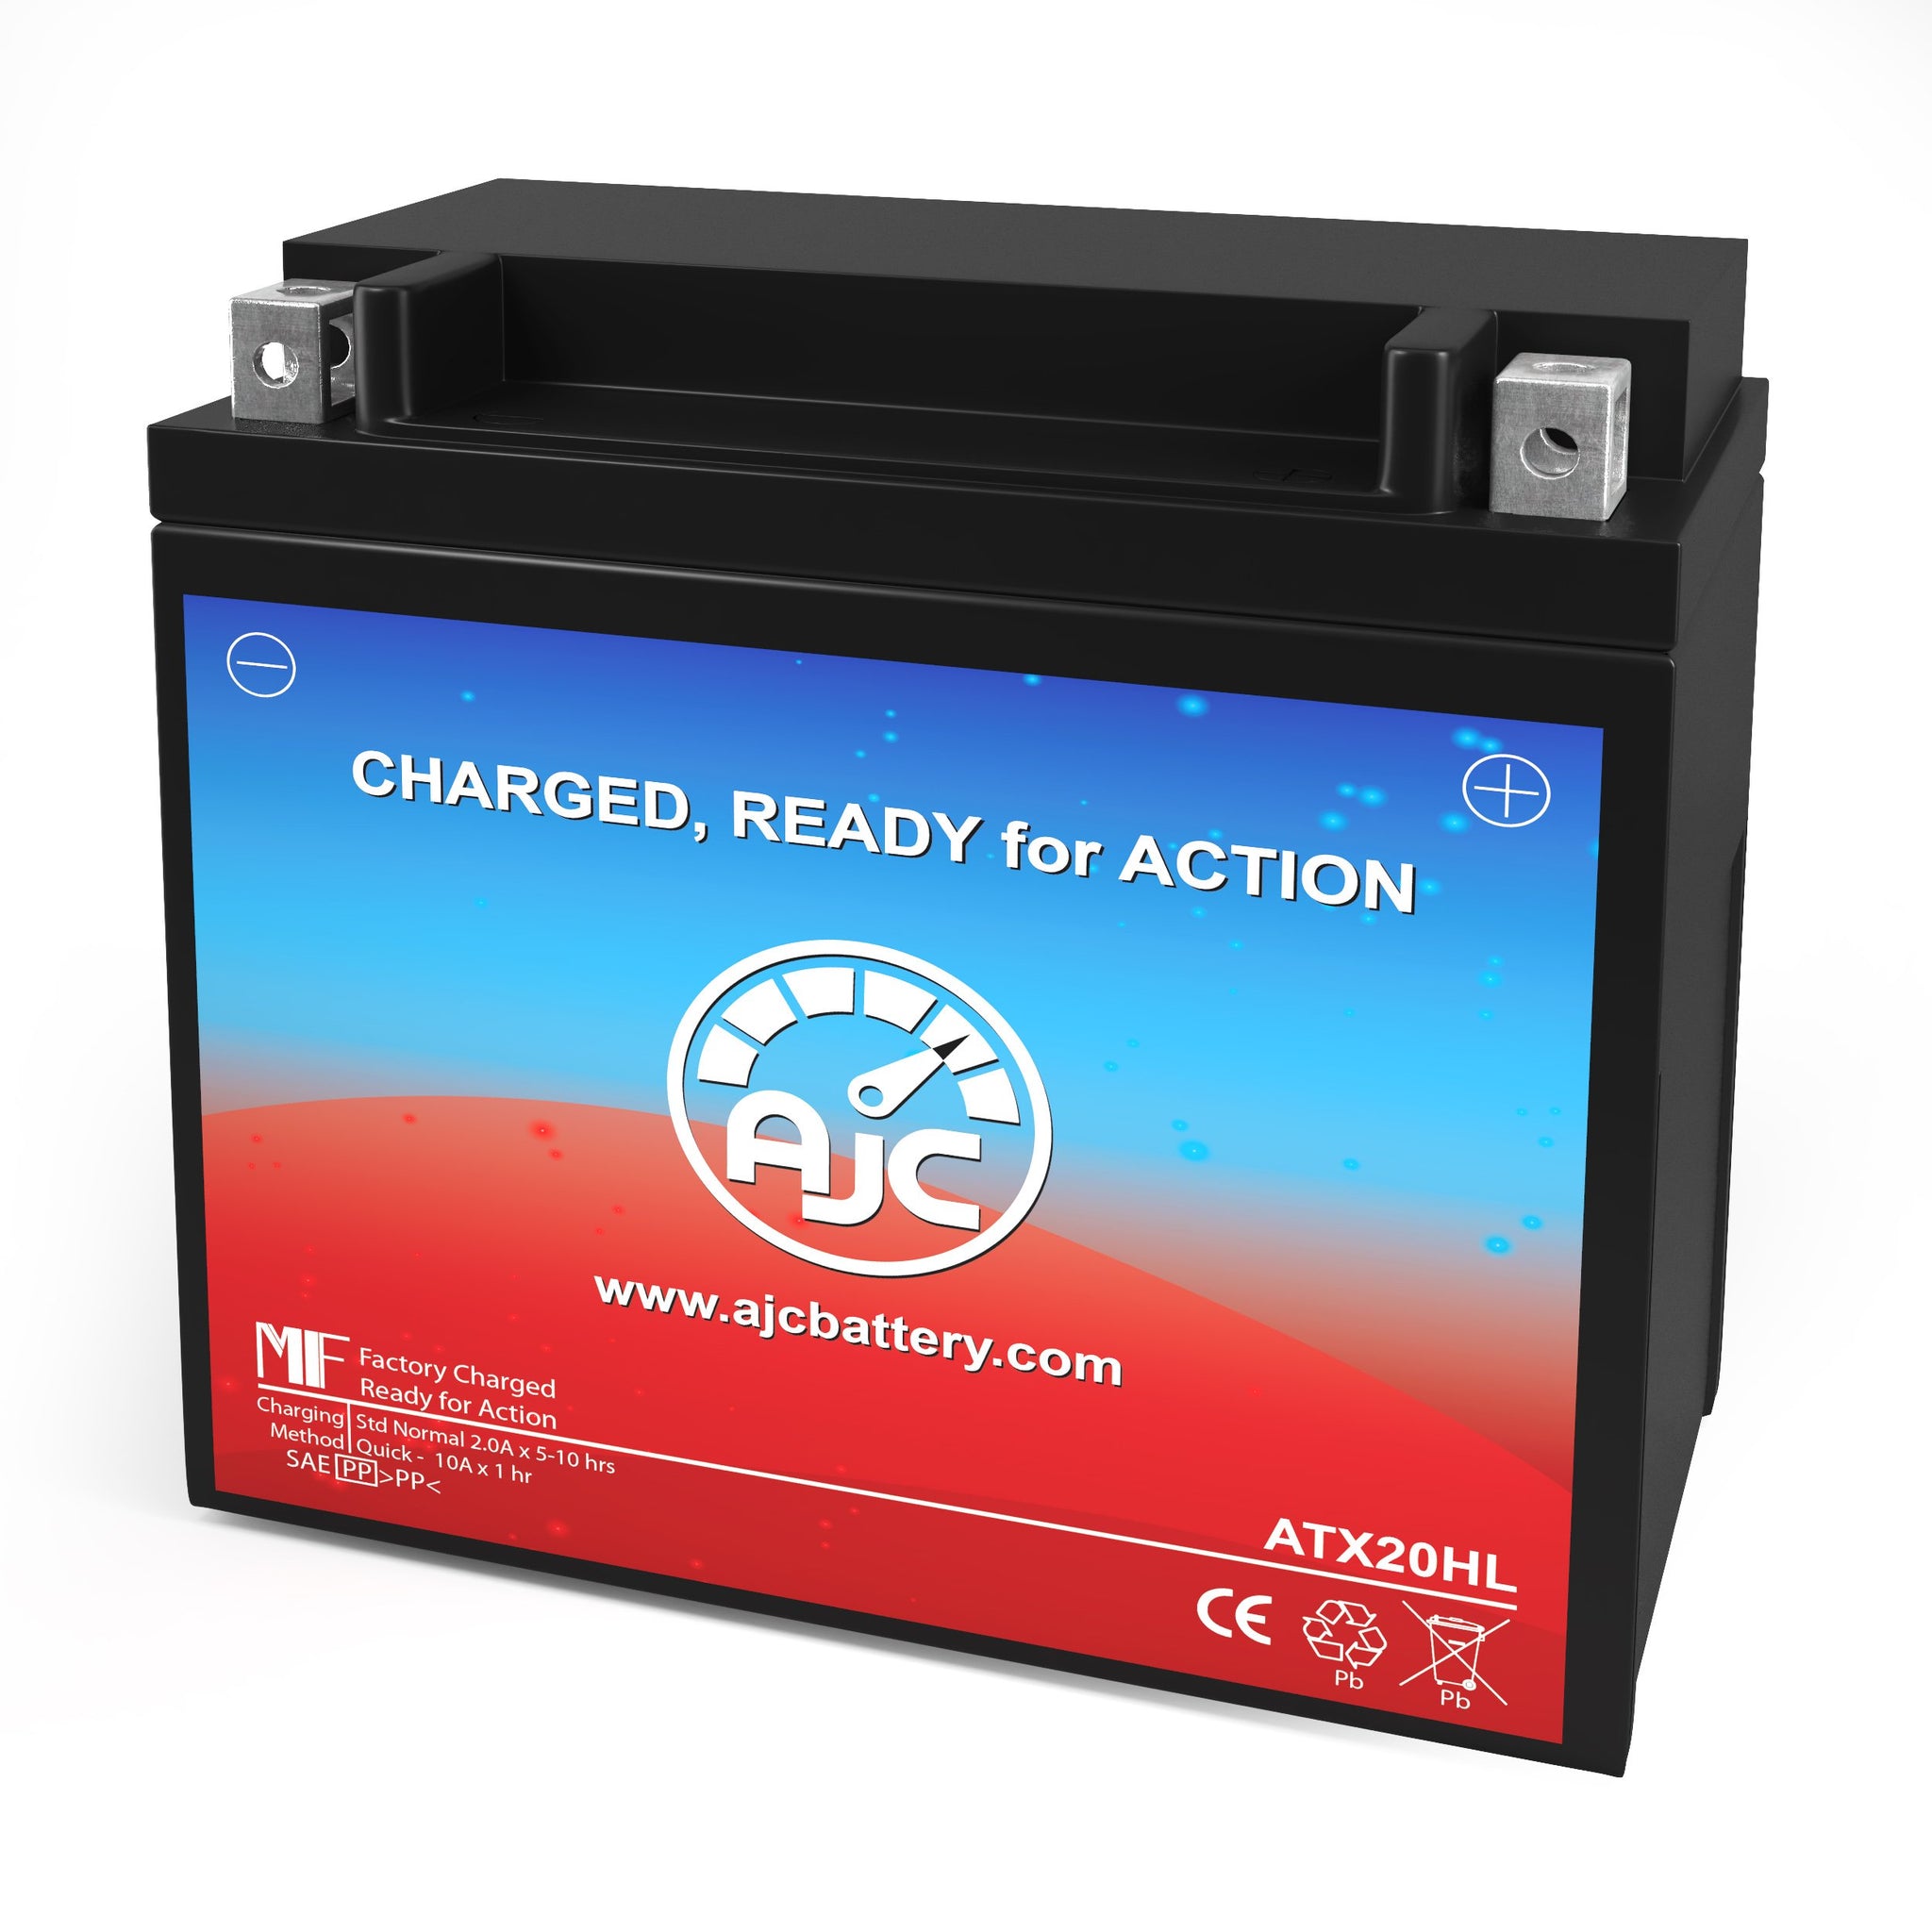 Snowmobile Replacement Batteries: BatteryClerk.com